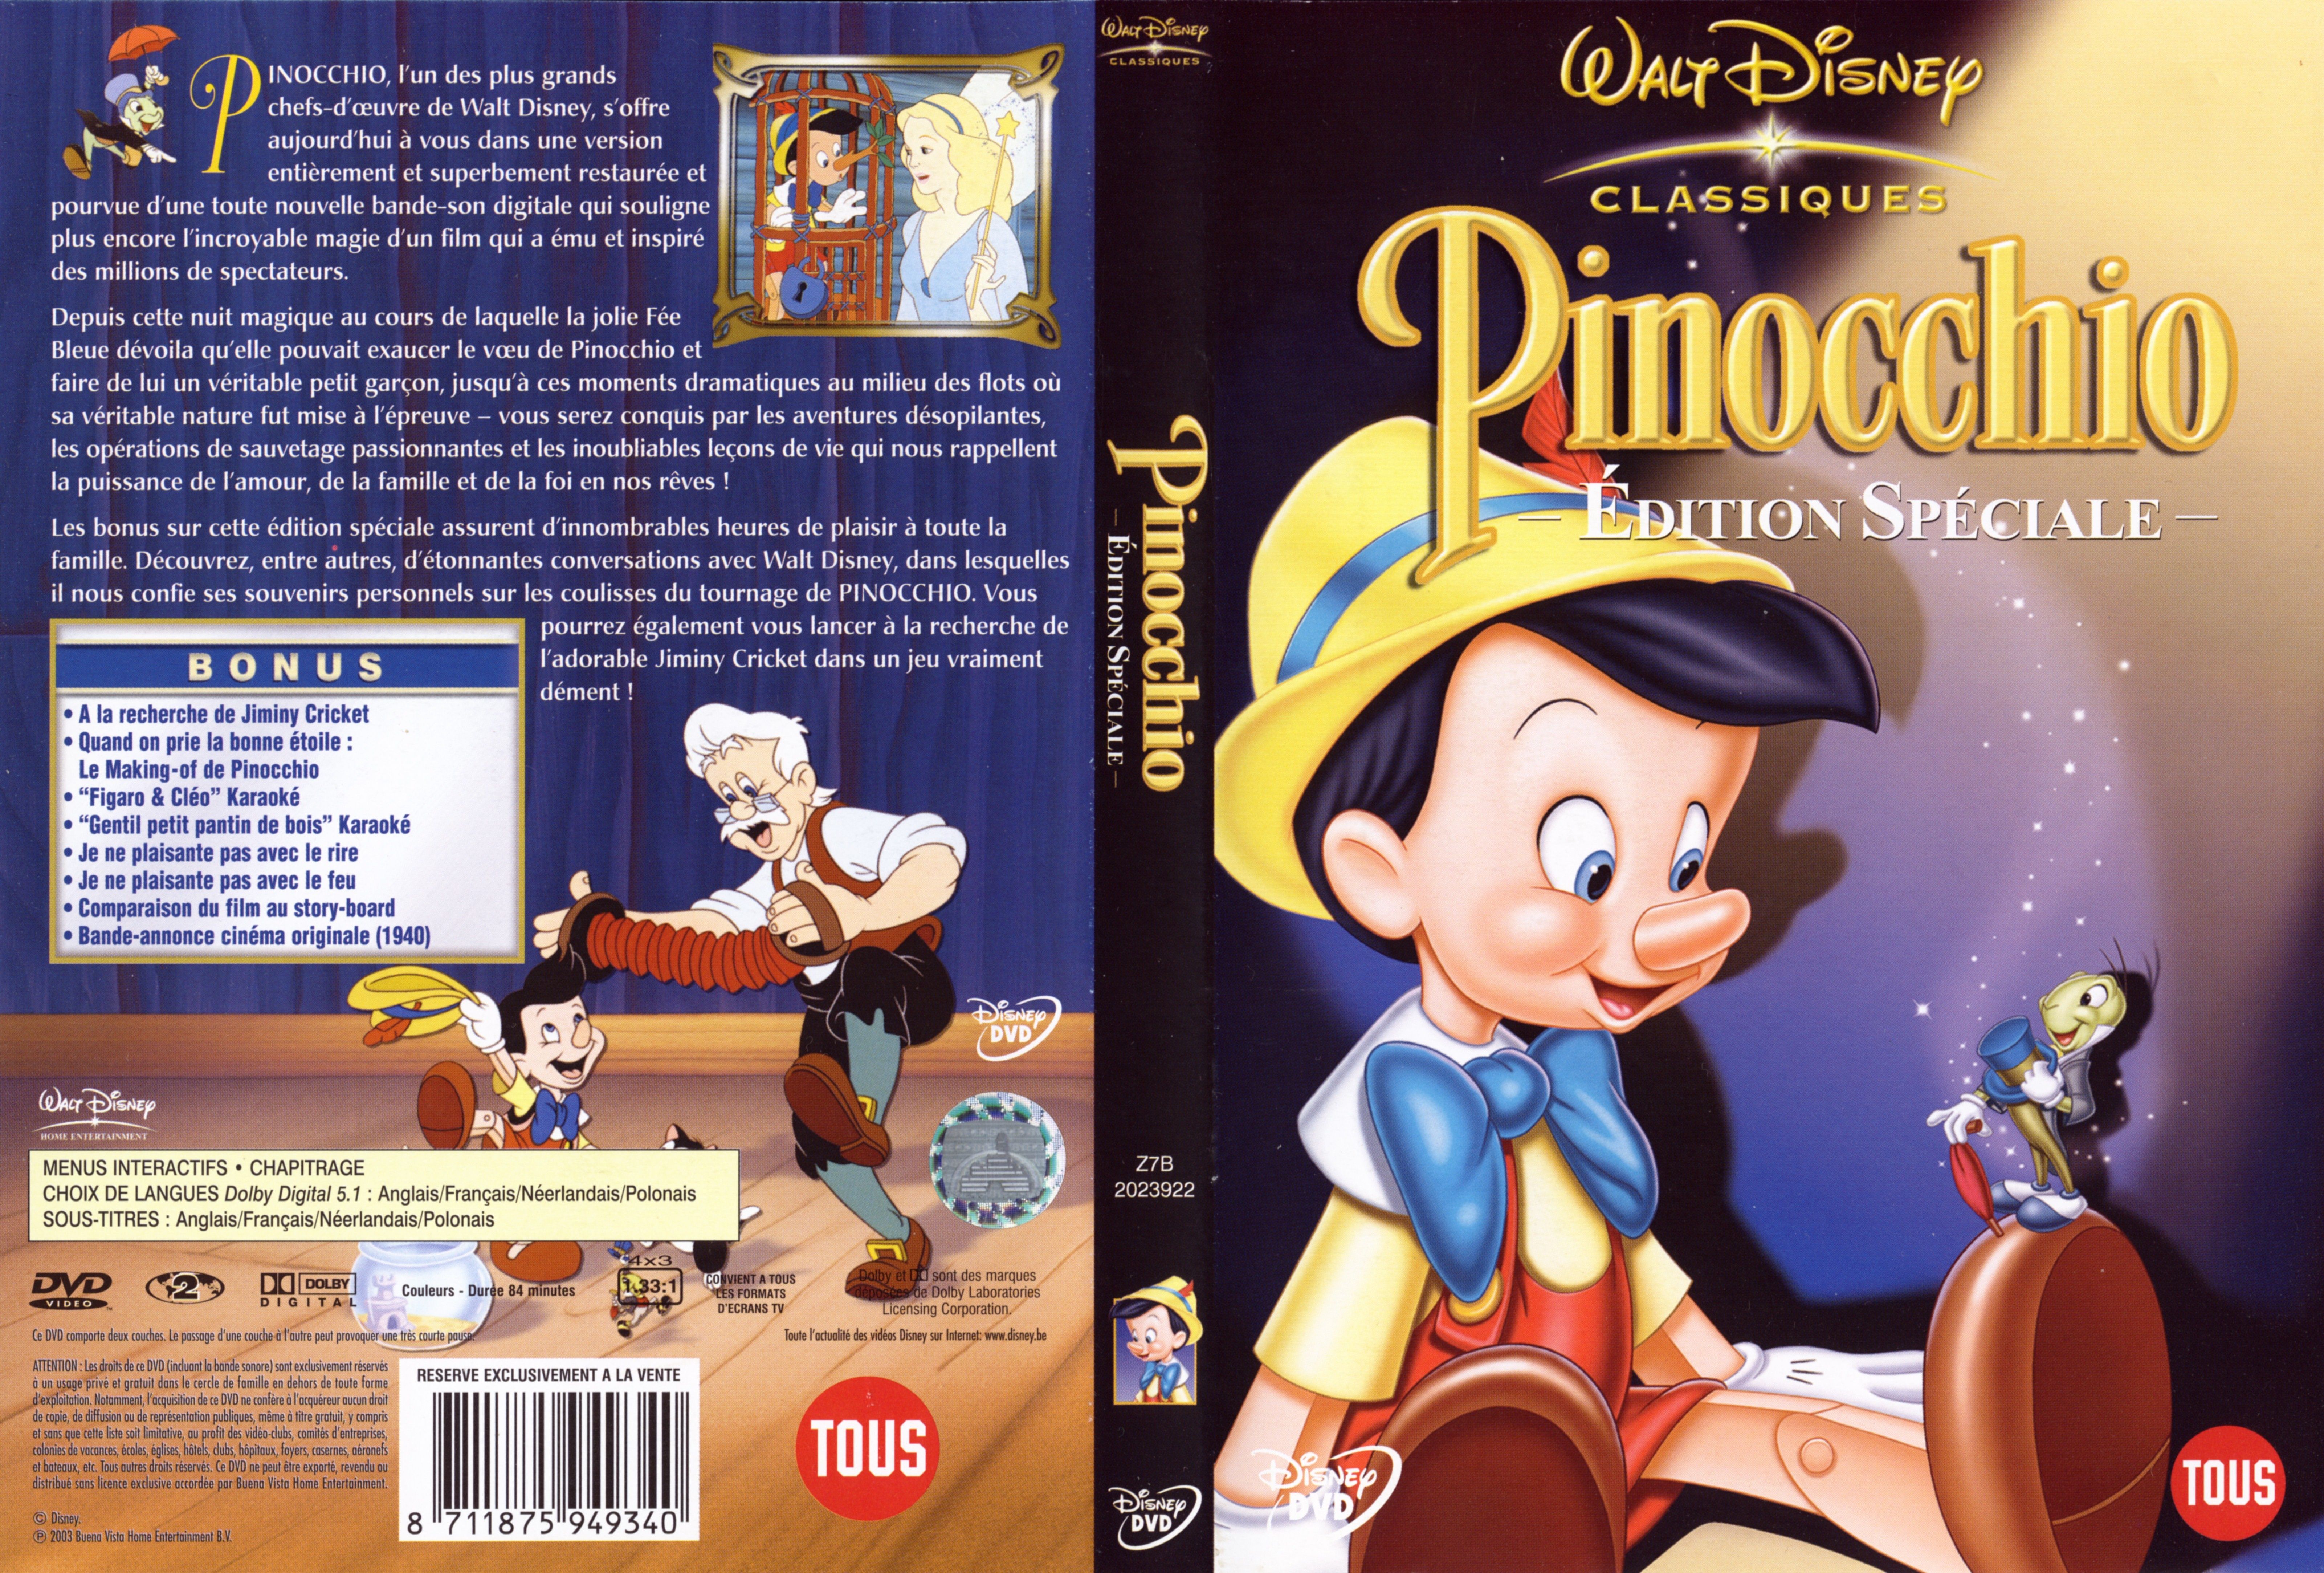 Jaquette DVD Pinocchio v2